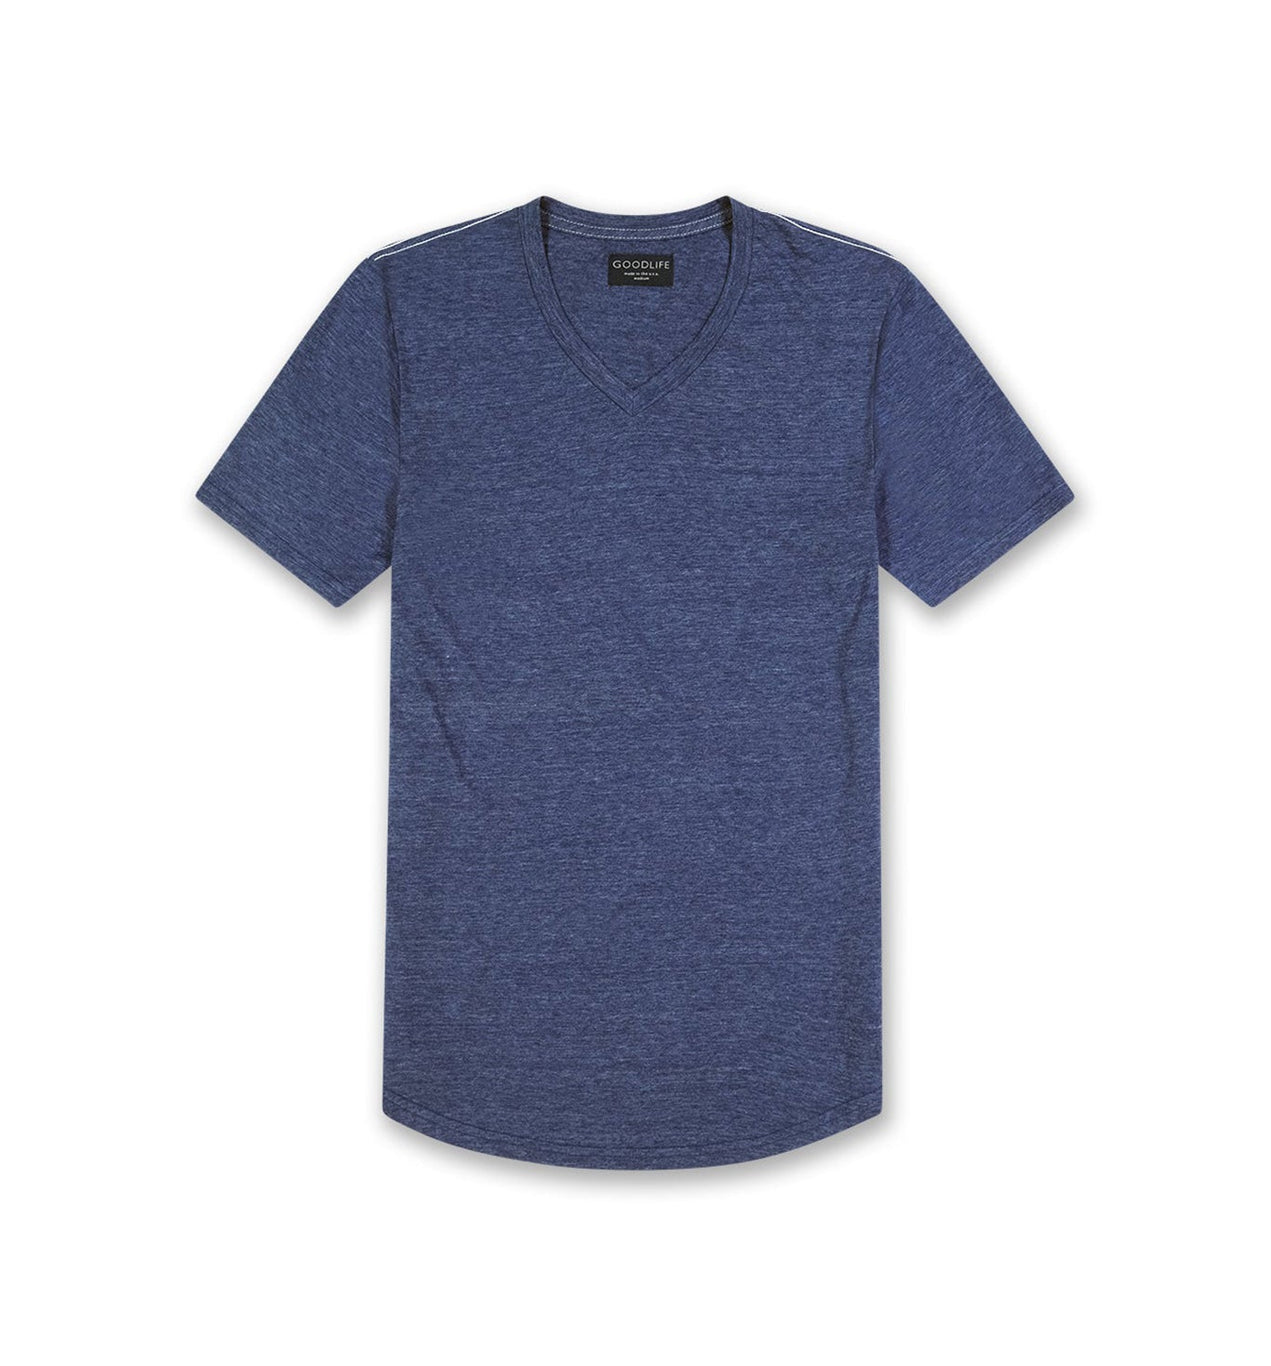 Soft T-Shirts for Men | Goodlife Clothing